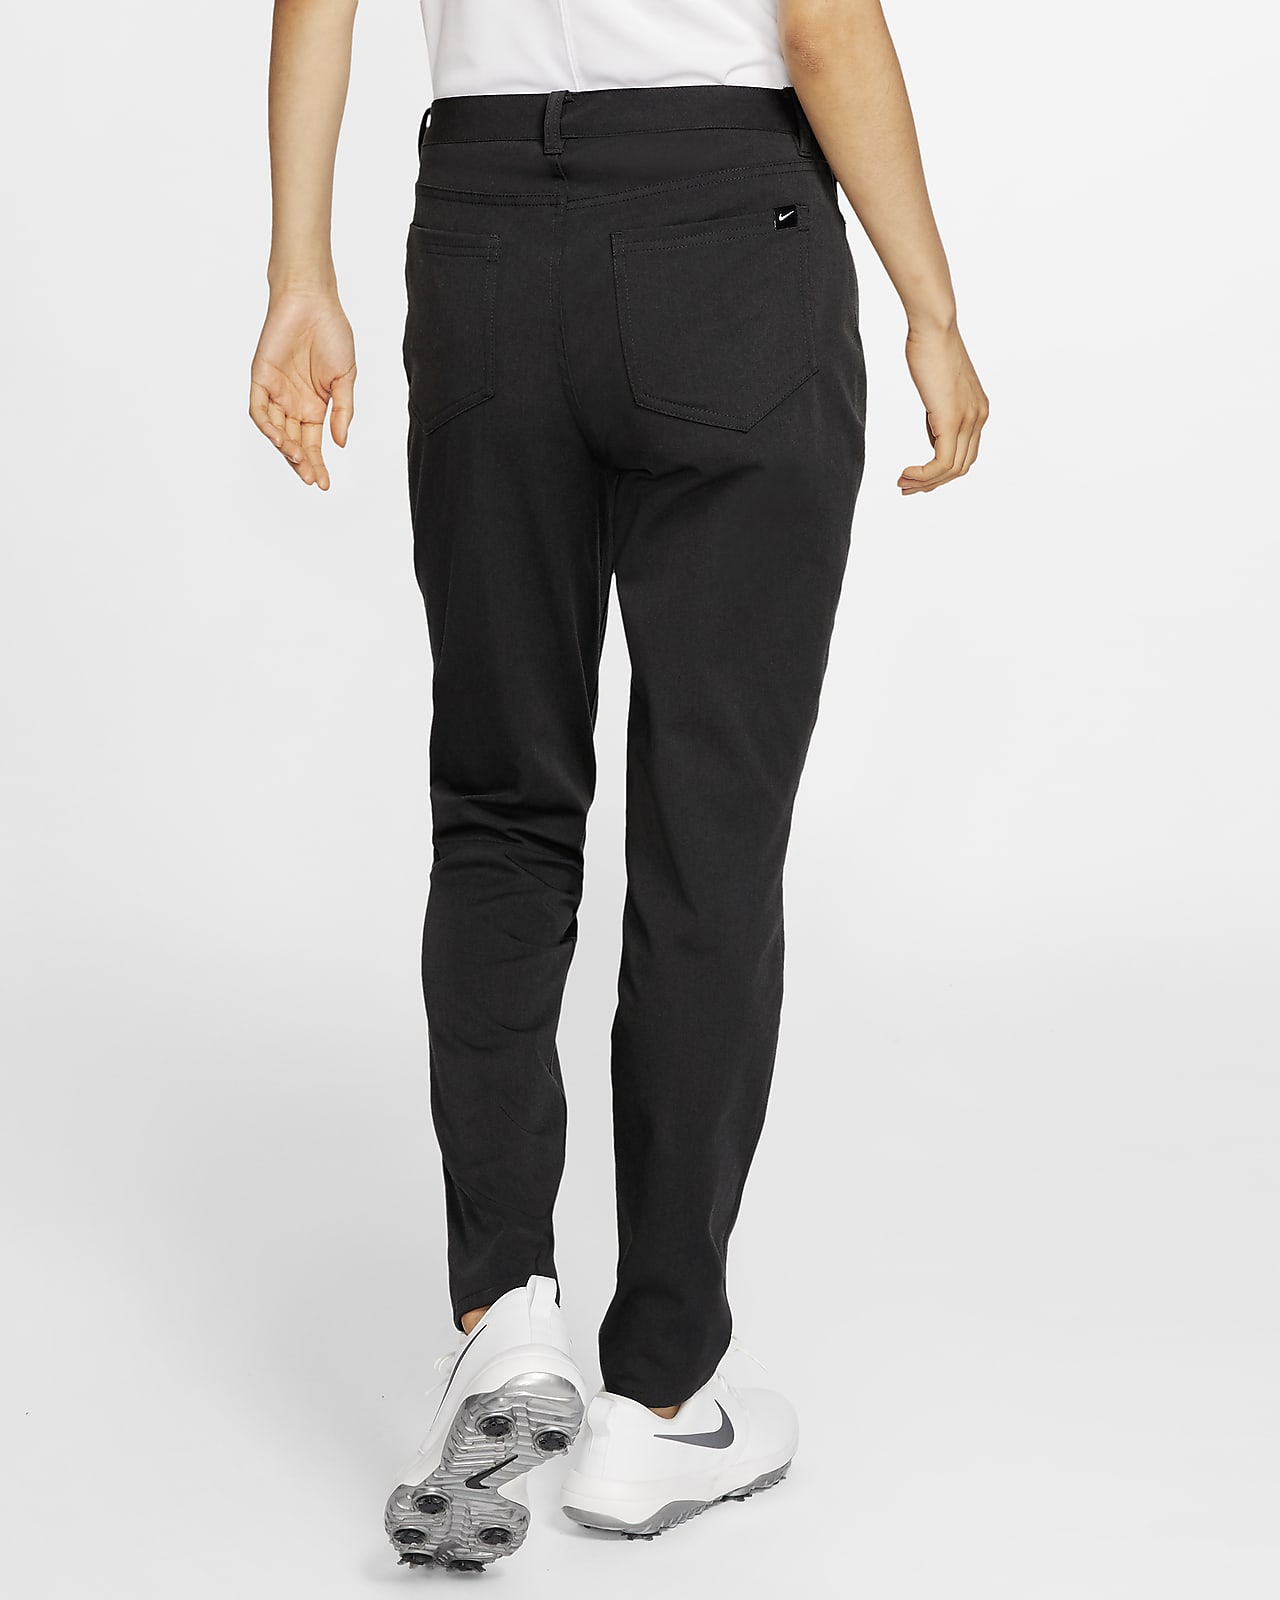 Nike Women's NWT $110 Swift Flex Slim Fit Woven Running Pants Black XXL